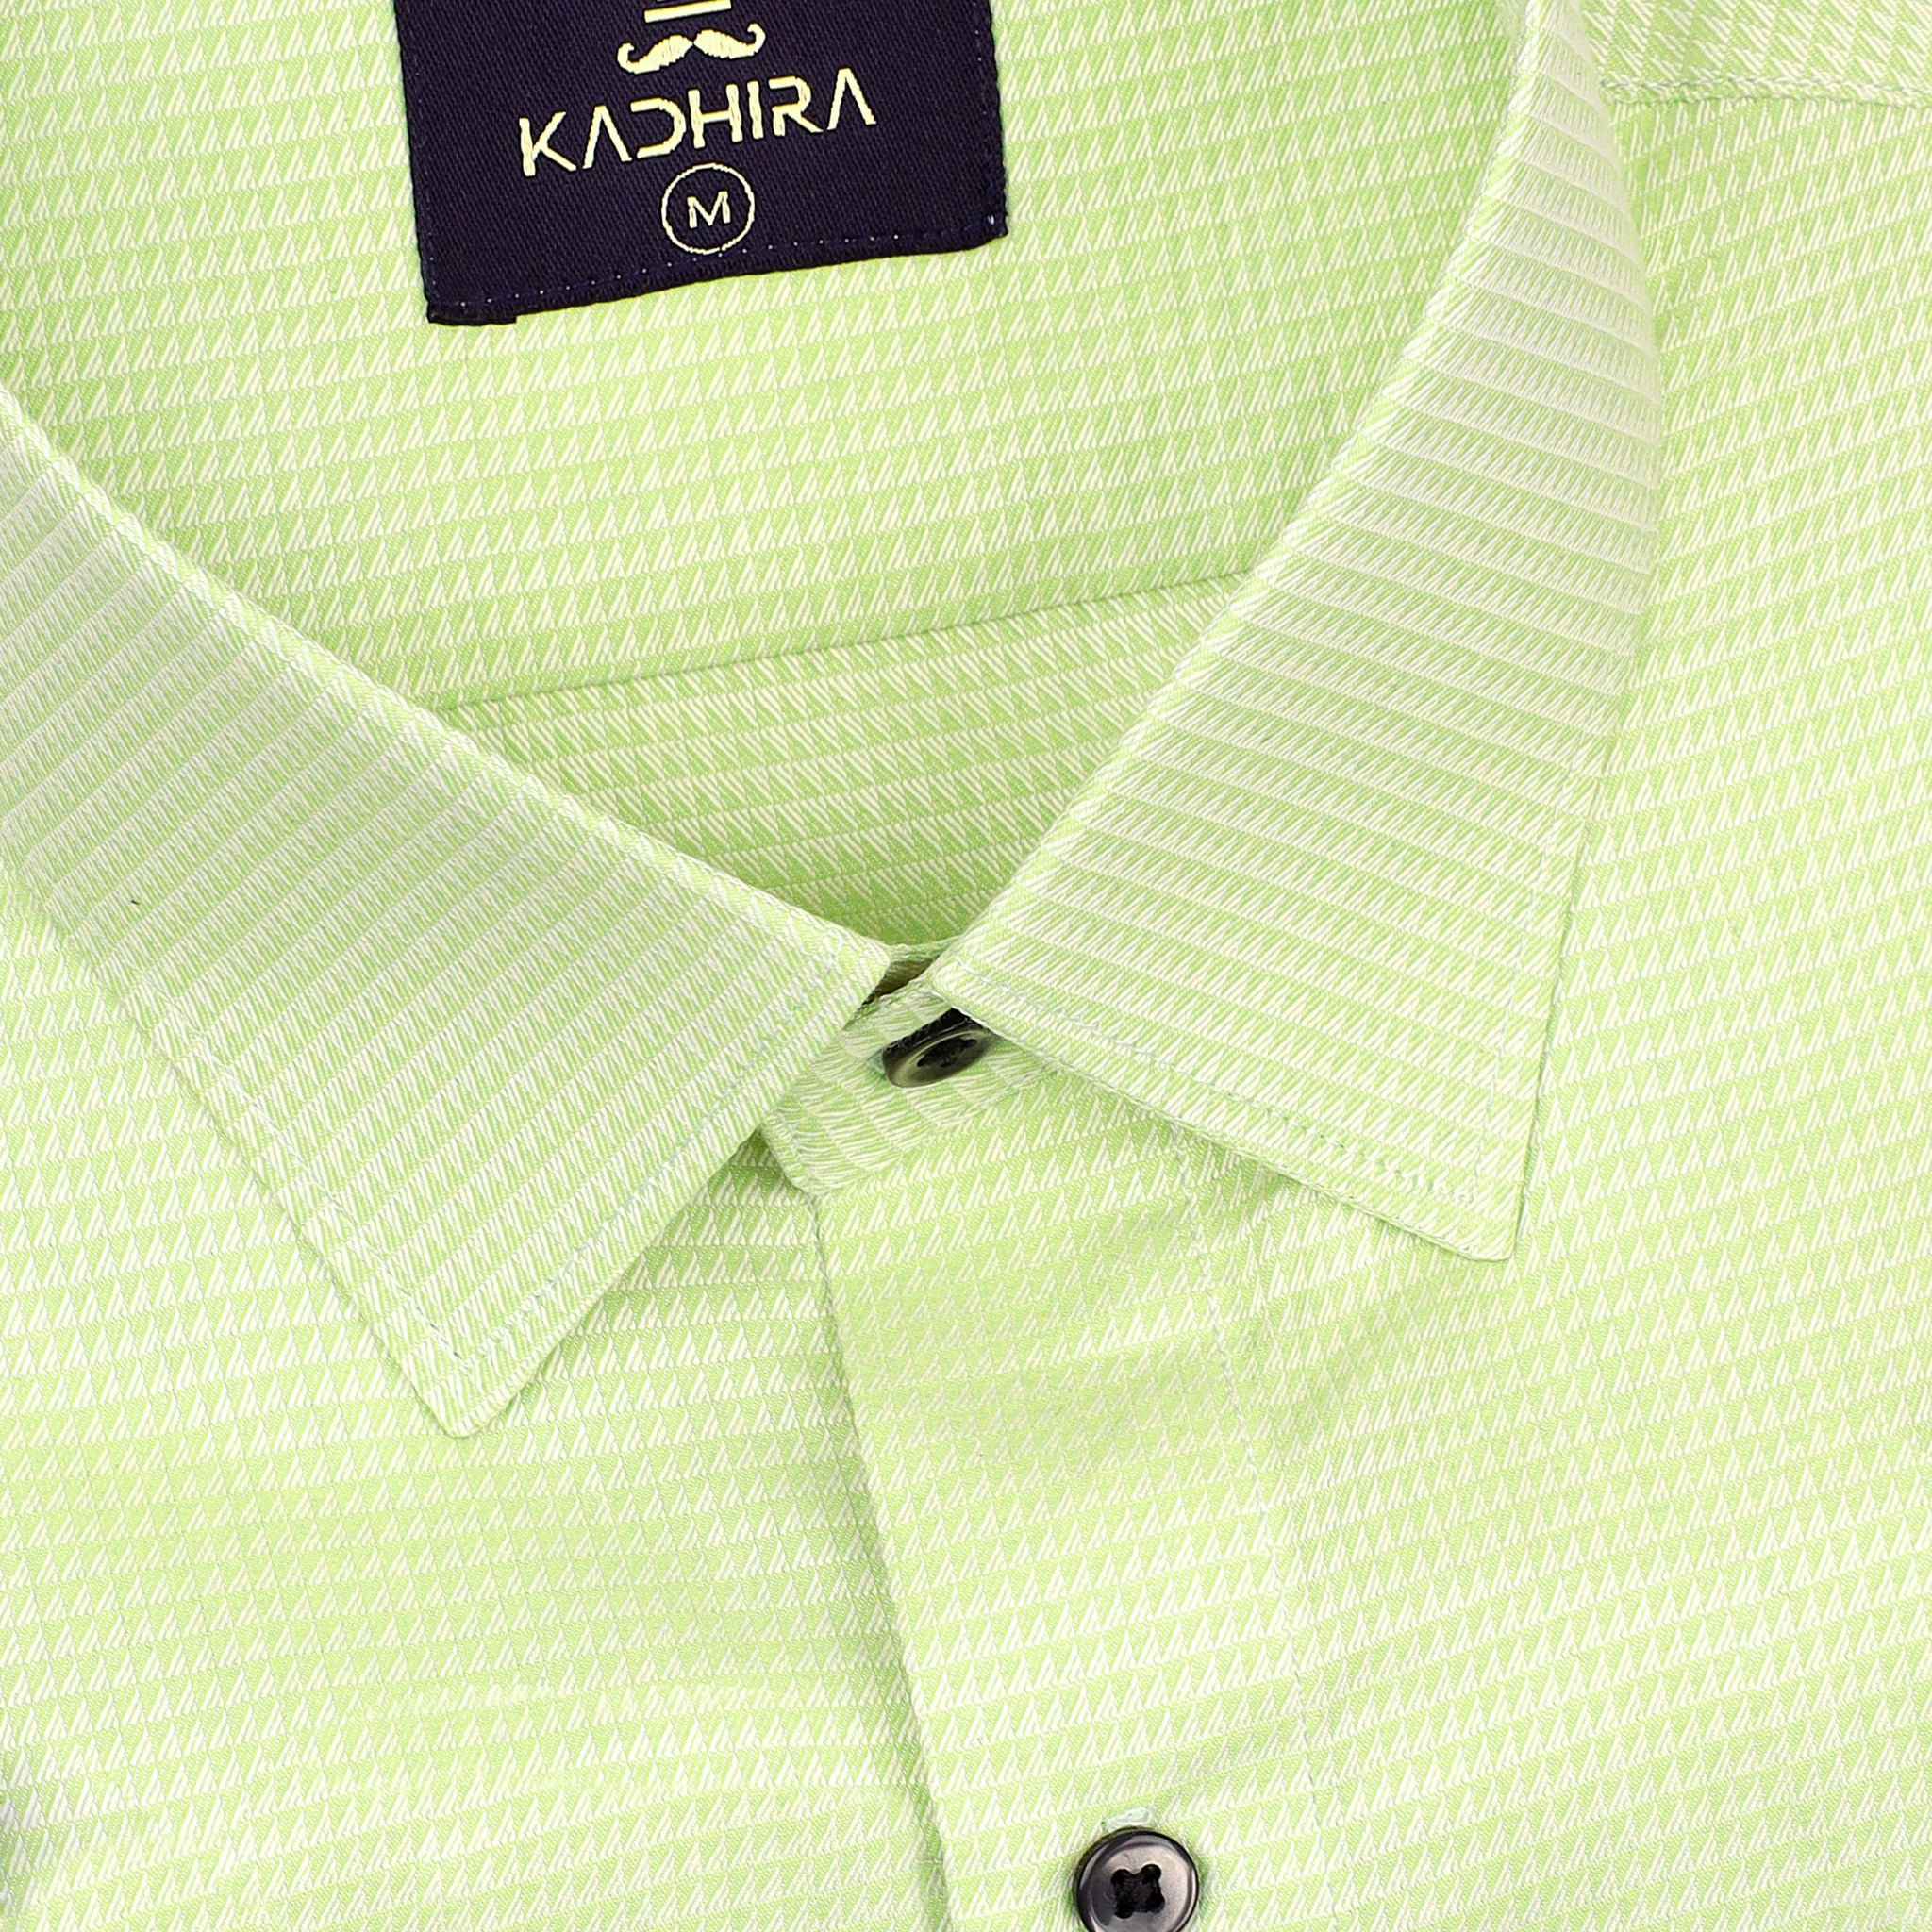 Lime Green  Dobby Textured Jacquard Cotton Shirt